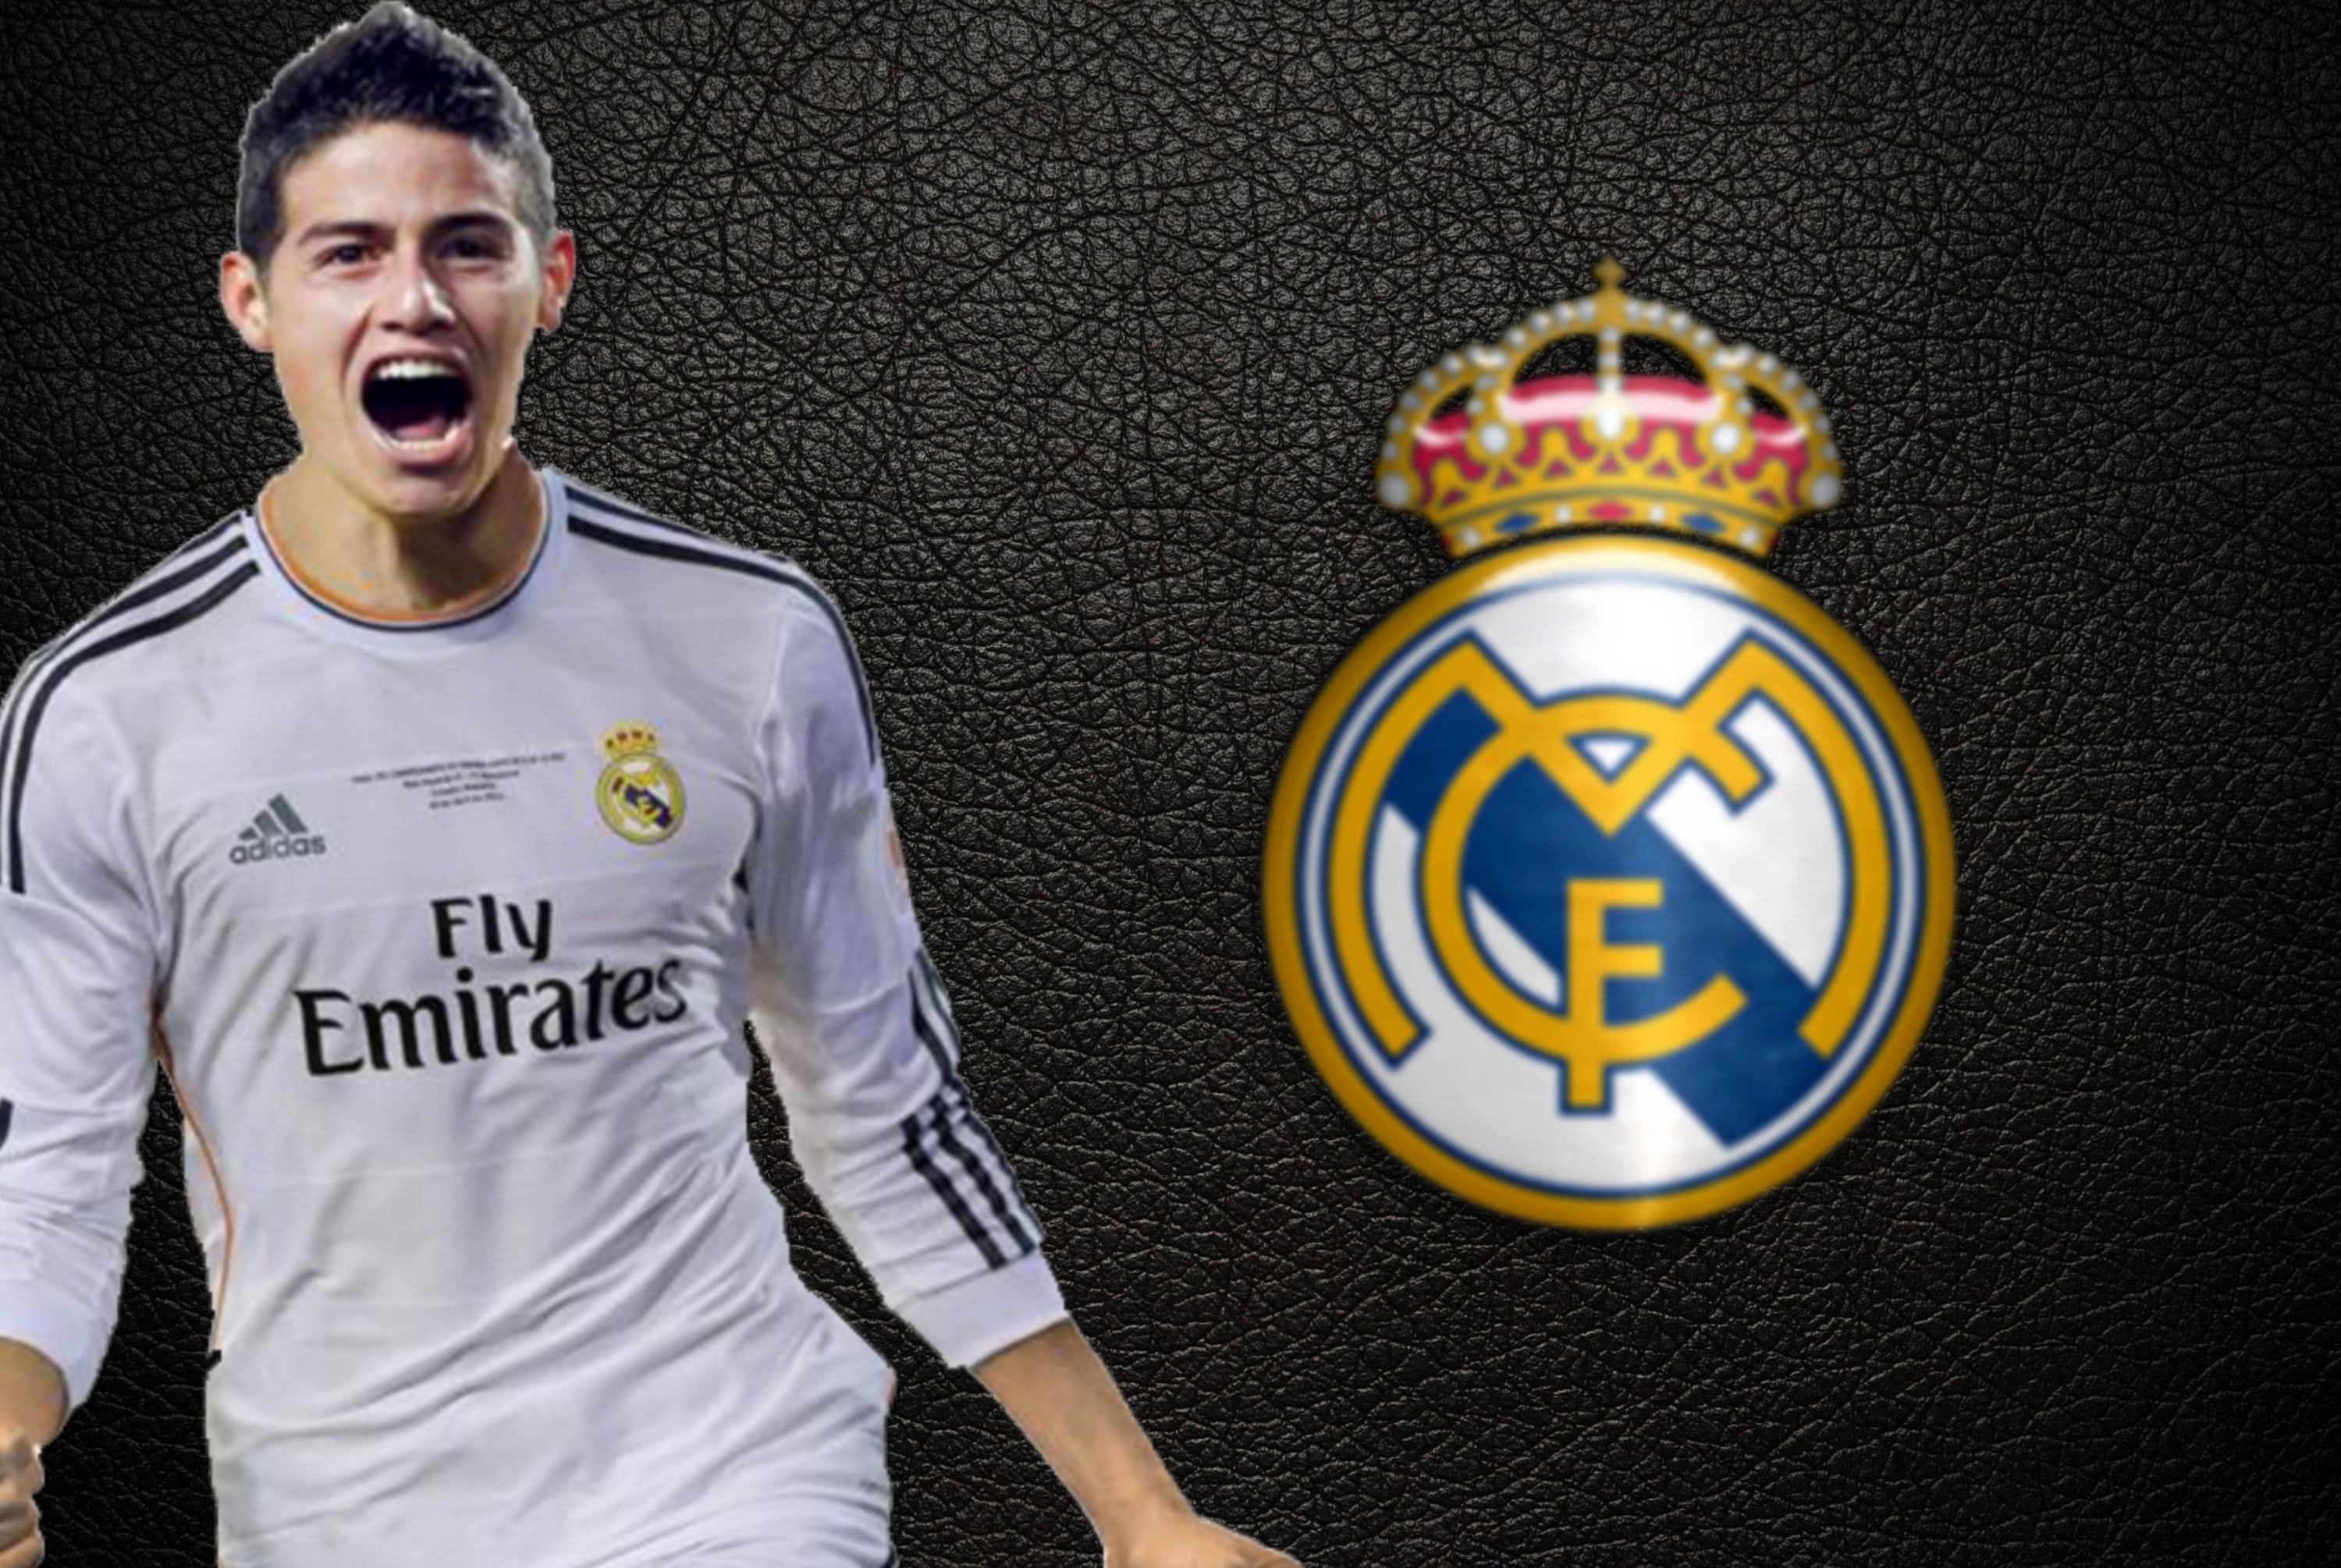 Real Madrid Wallpaper 3d